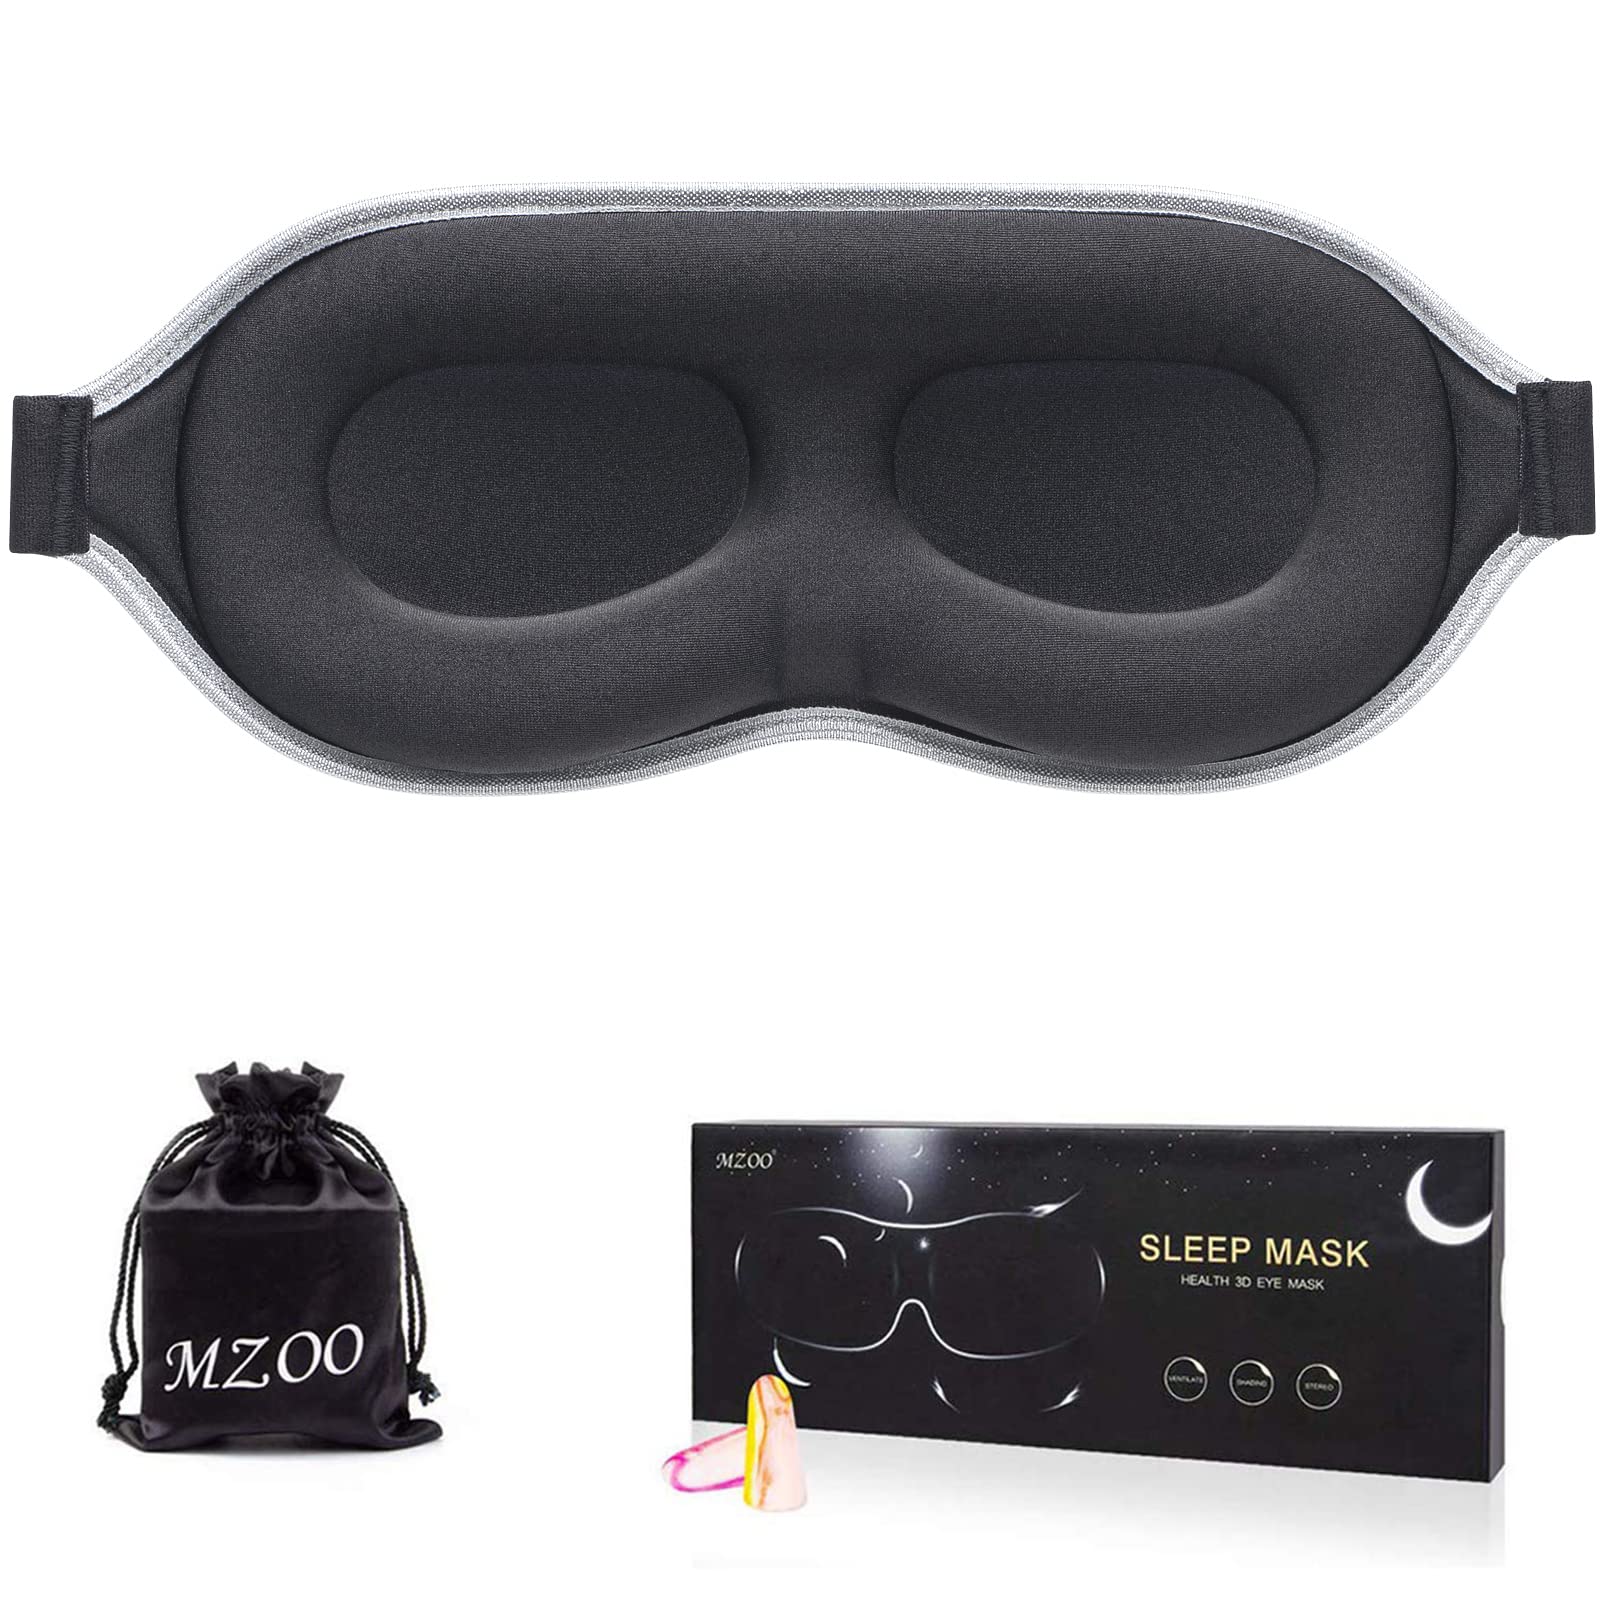 3D Sleep Mask, New Arrival Sleeping Eye Mask for Women Men, Contoured Cup  Night Blindfold, Luxury